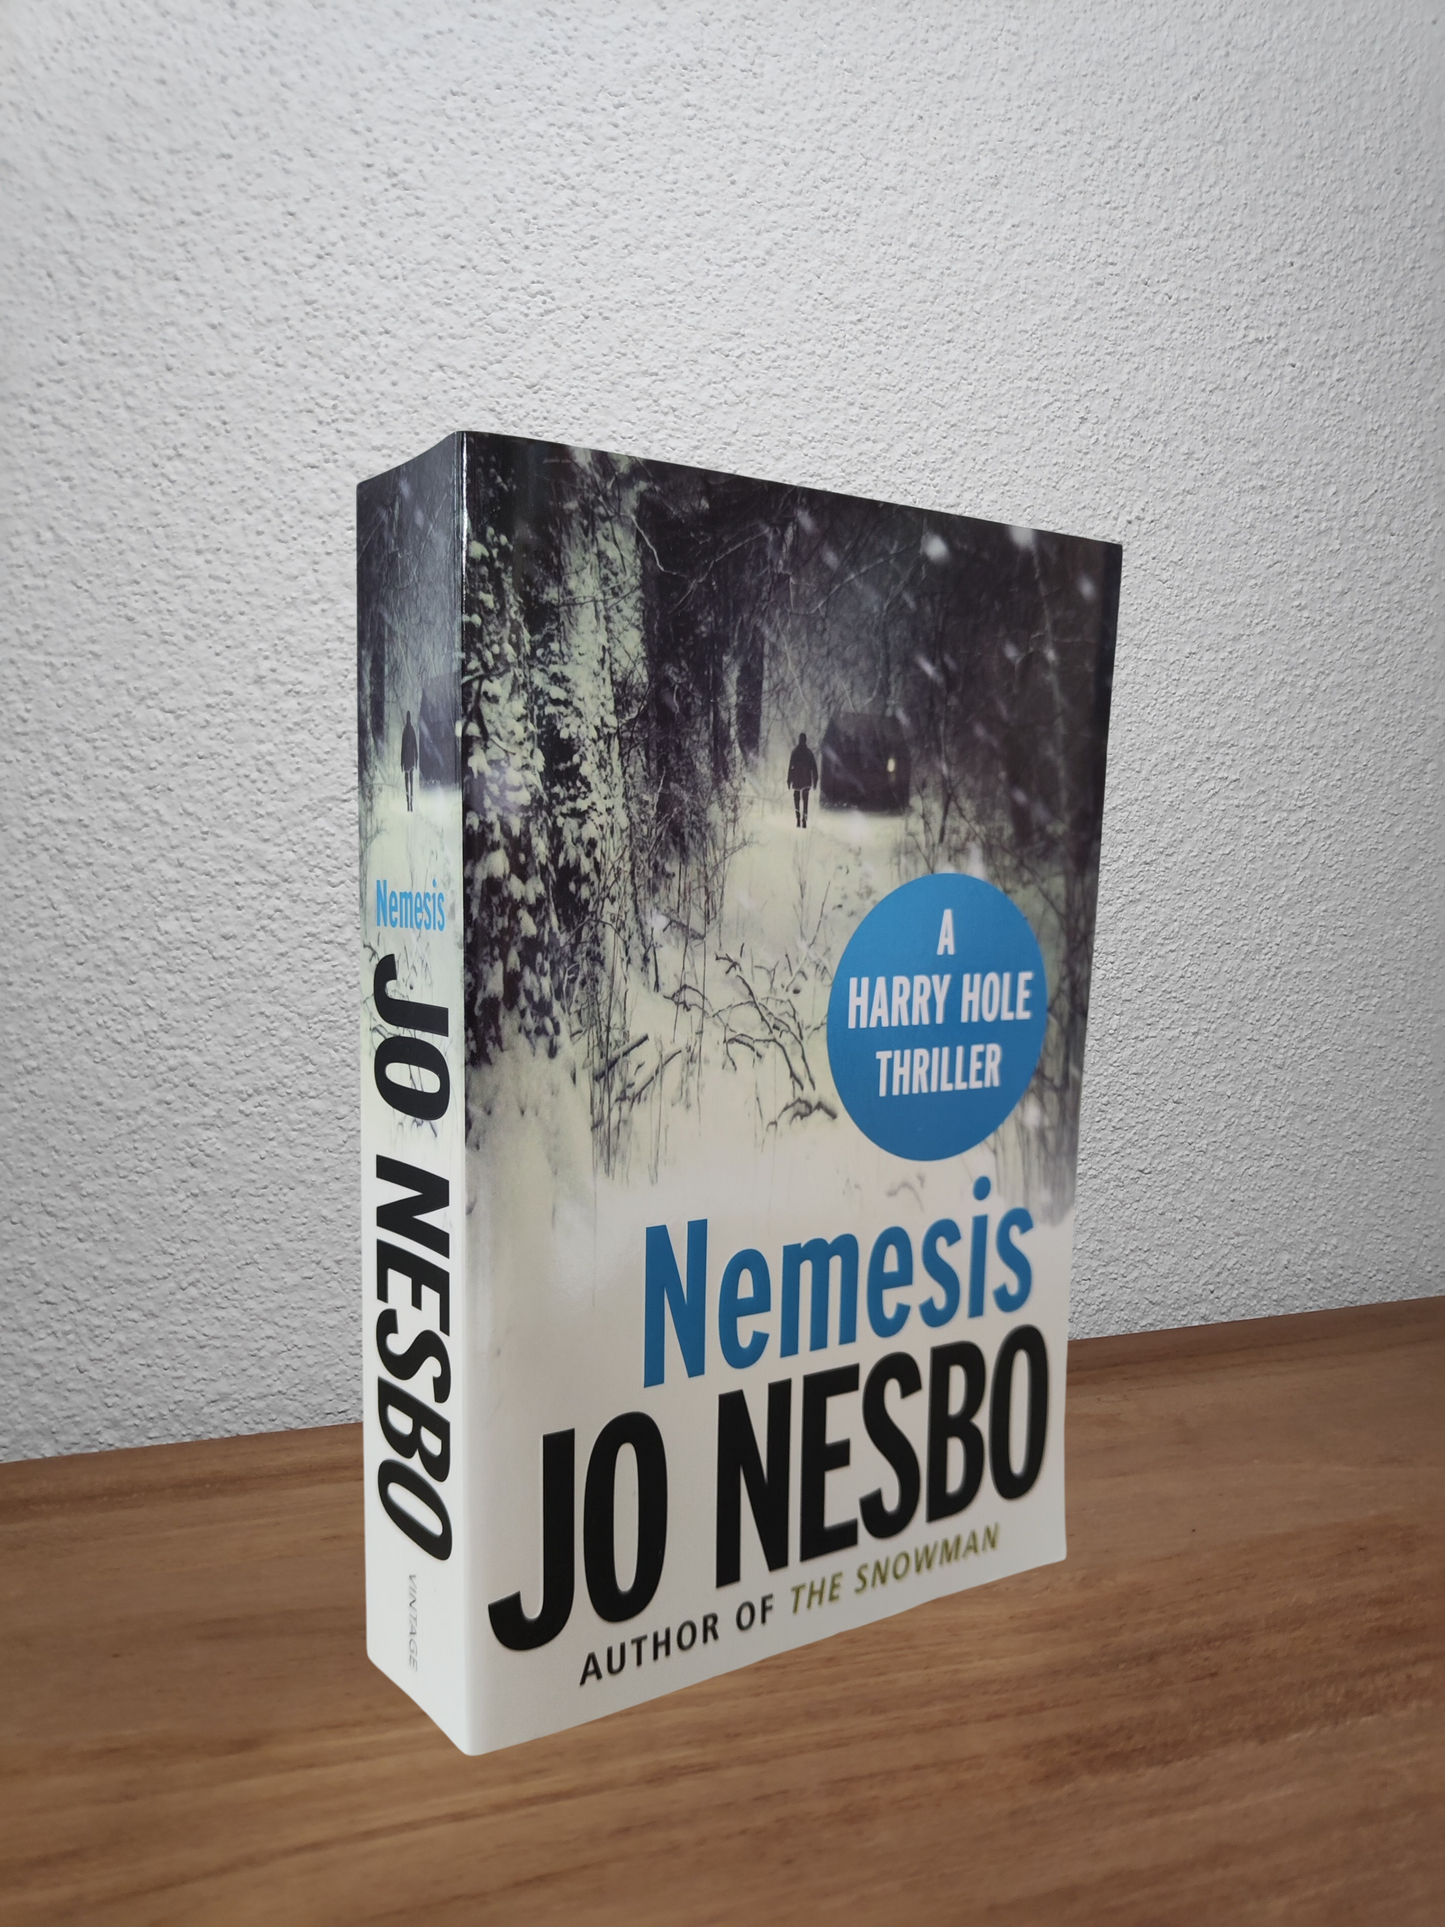 Jo Nesbo - Nemesis (Harry Hole #4)